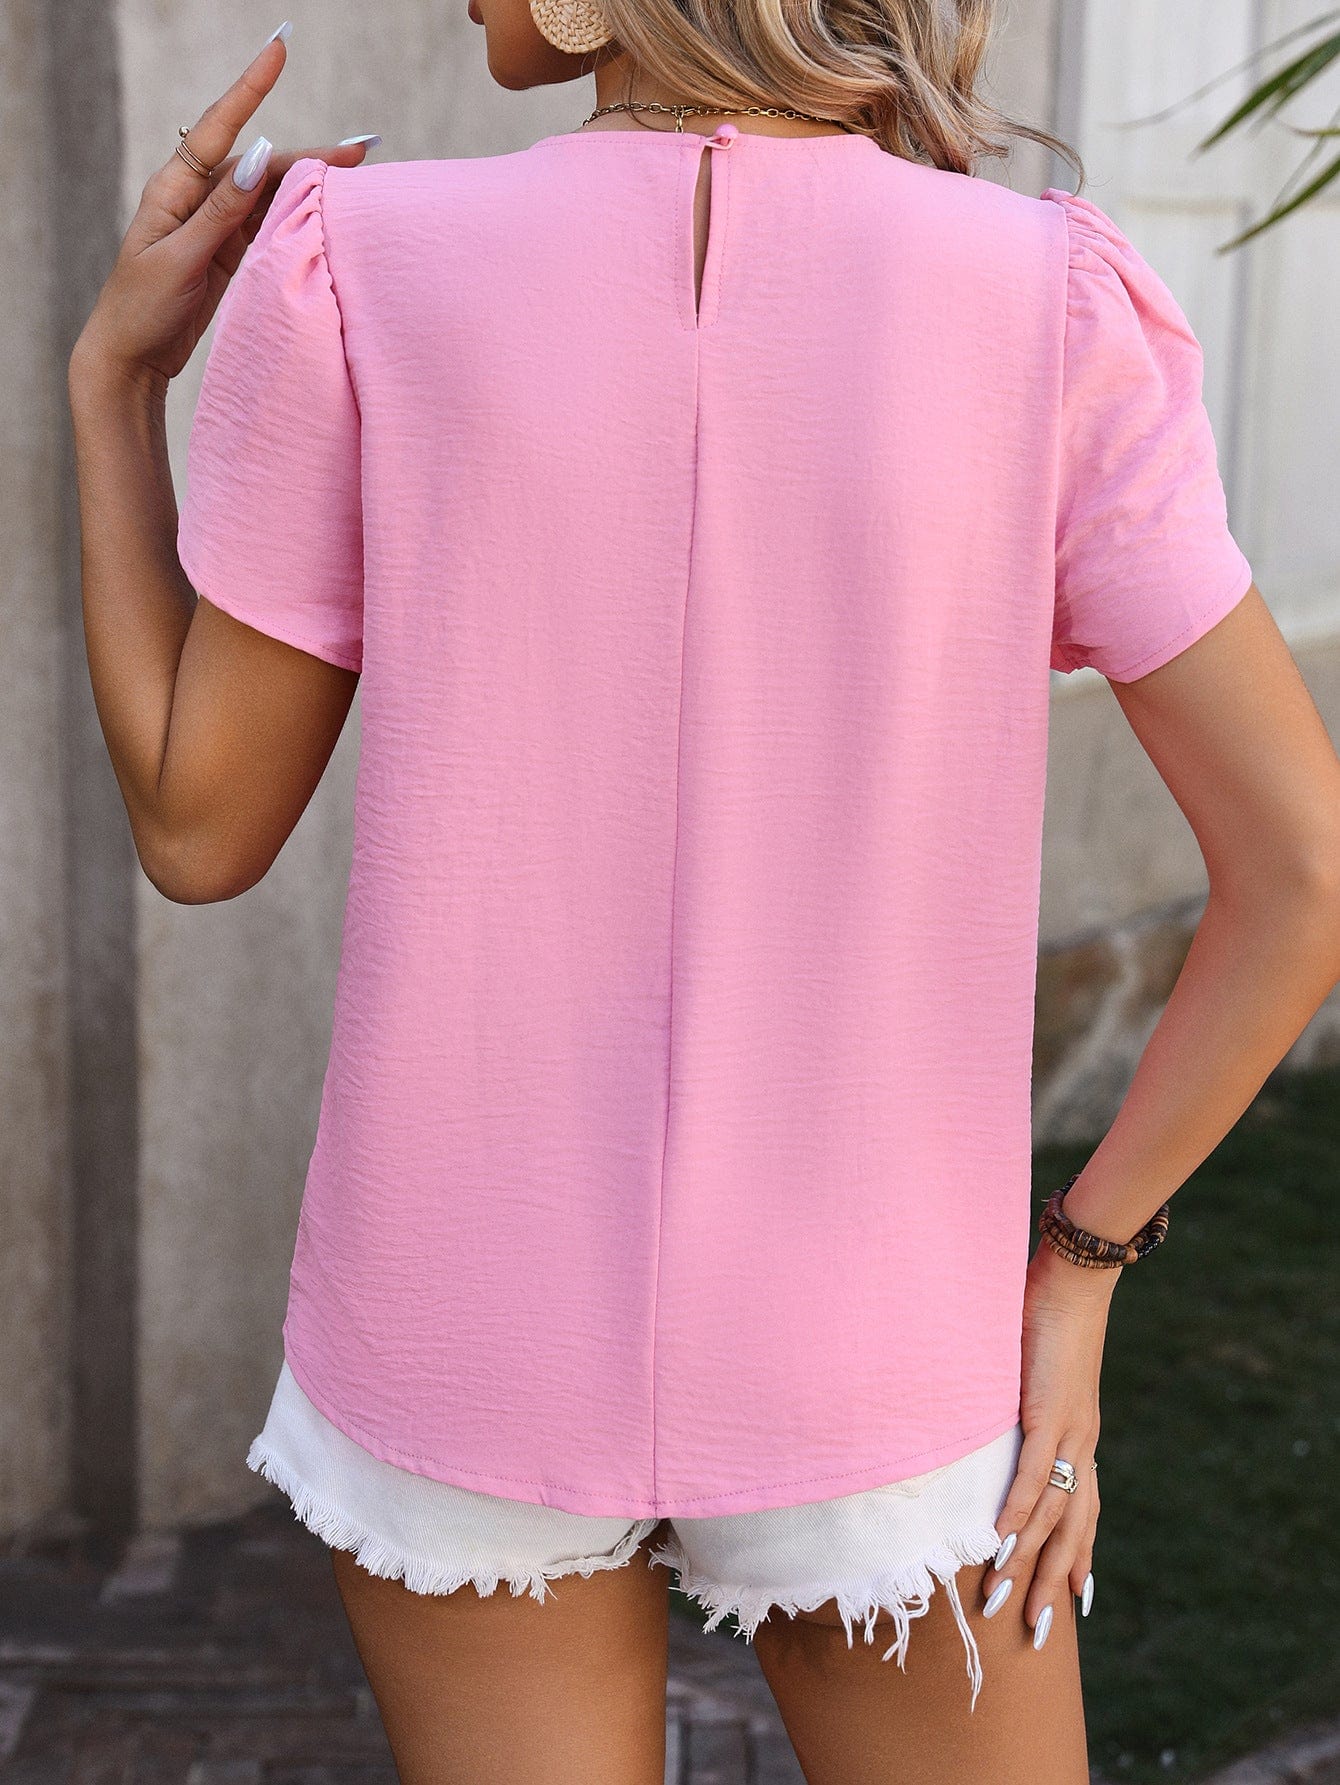 Women's leisure V-neck chiffon shirt floral puff sleeve temperament top